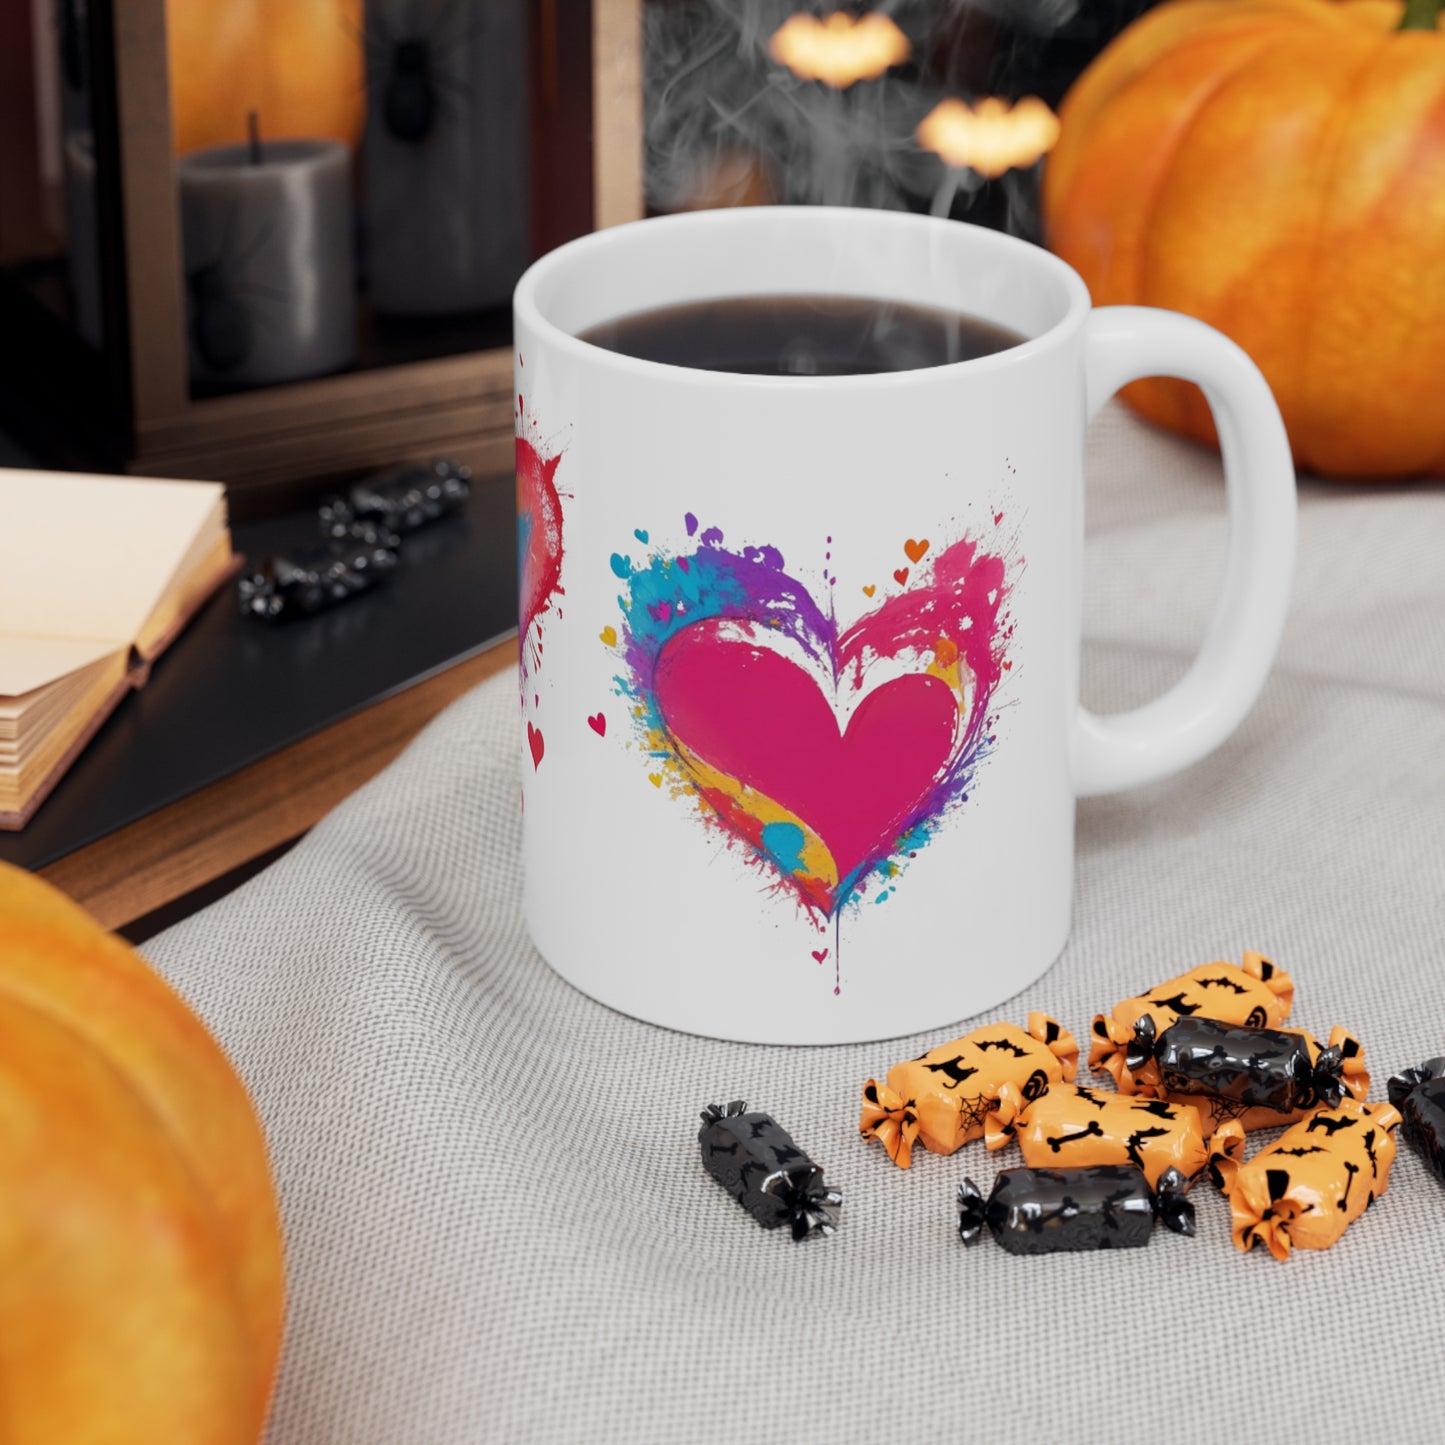 Colourful Messy Love Hearts Art Mug - Ceramic Coffee Mug 11oz